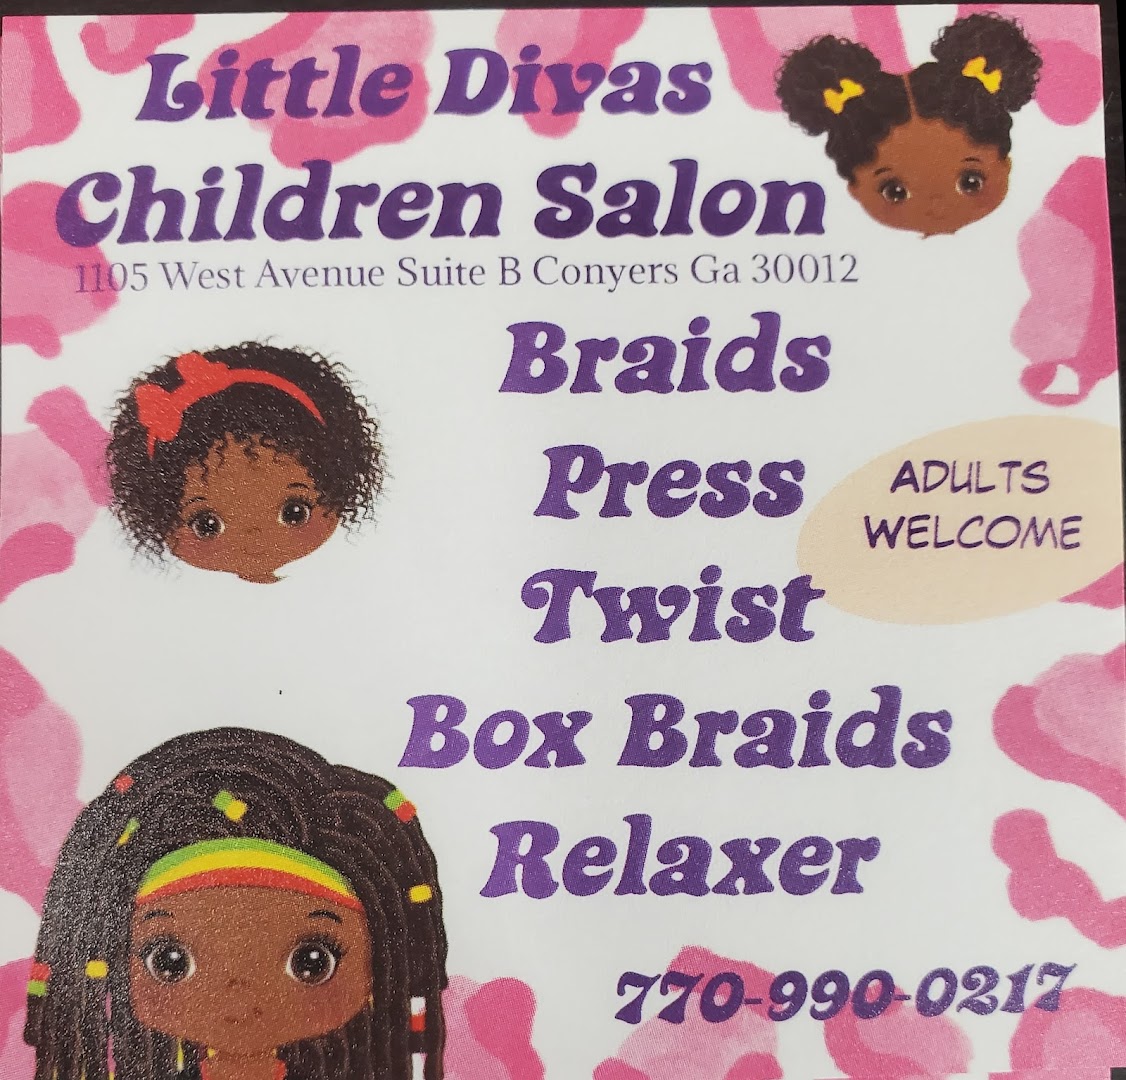 Little Divas Children's Salon